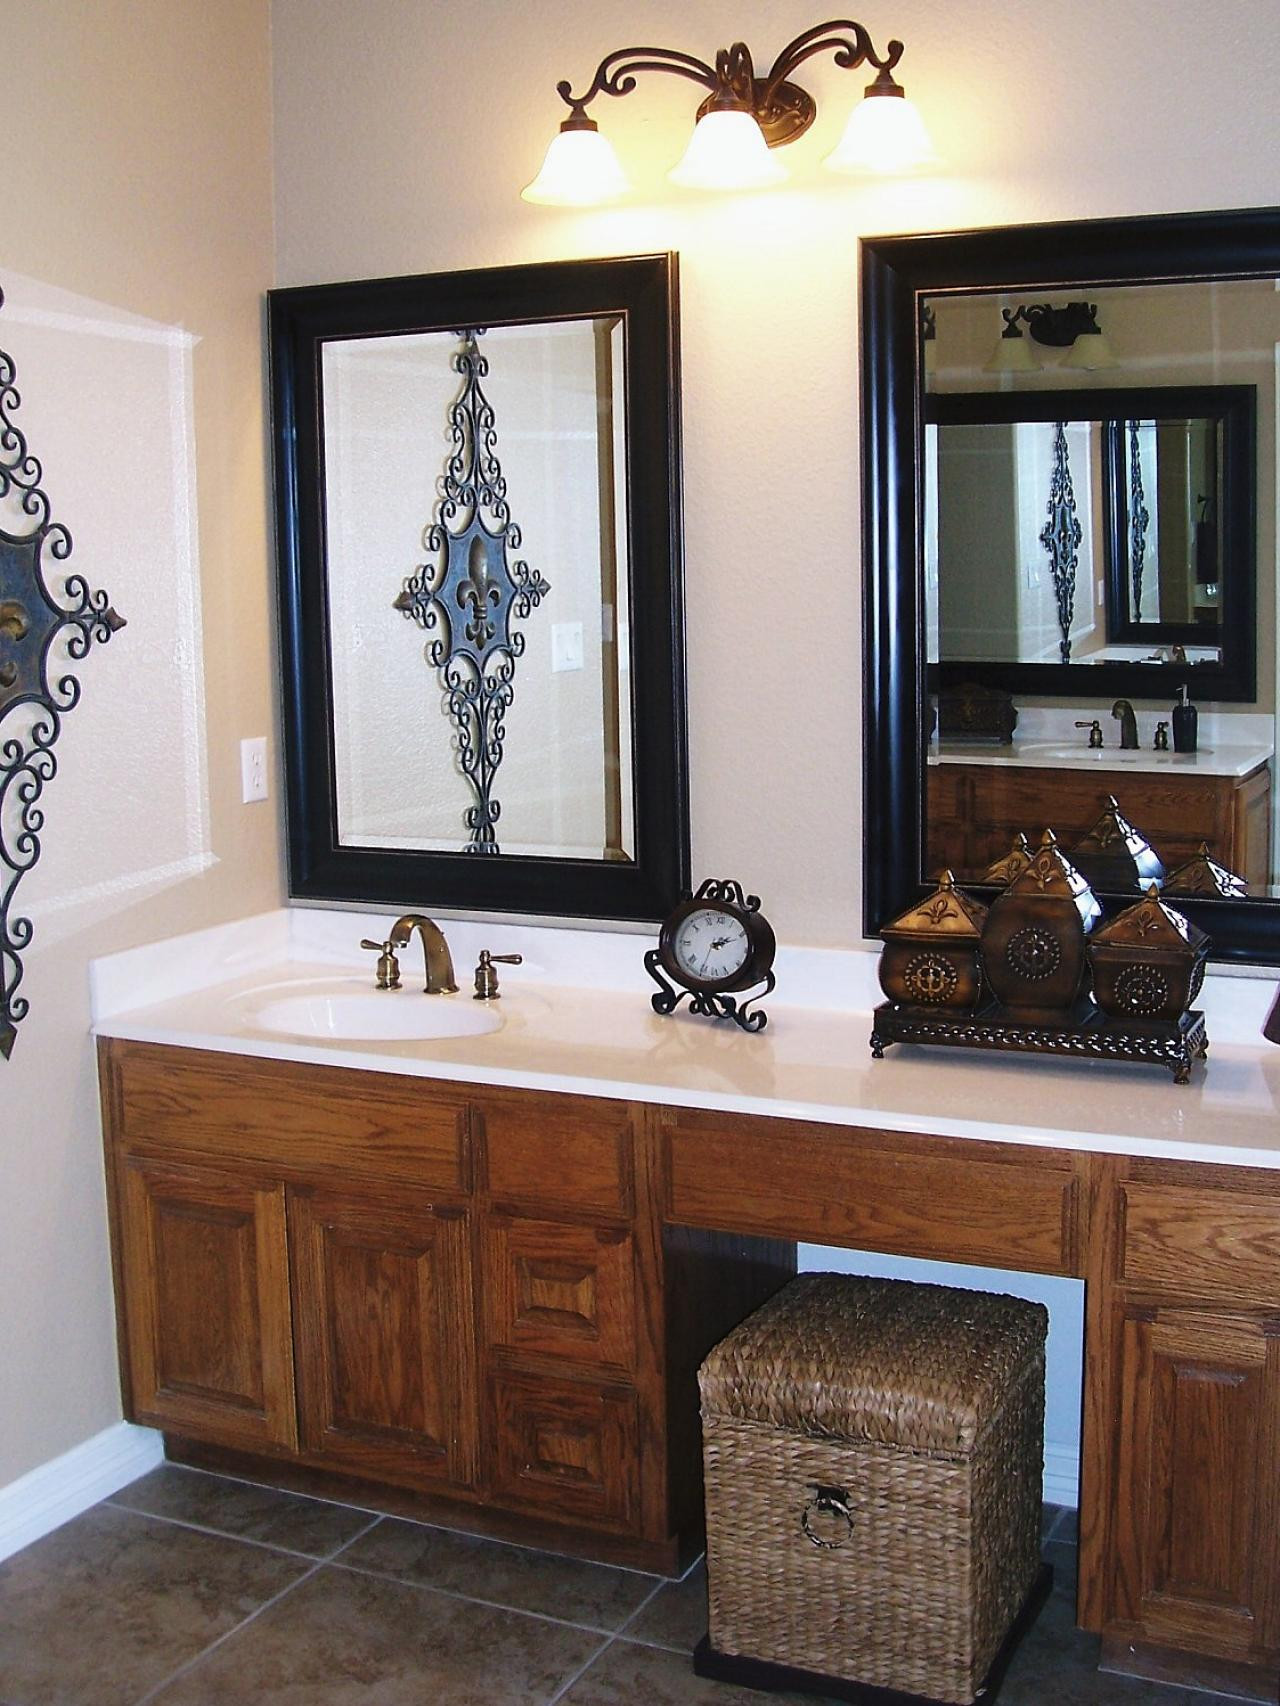 Bathroom Double Vanity Ideas
 Bathroom Vanity Mirrors for Aesthetics and Functions